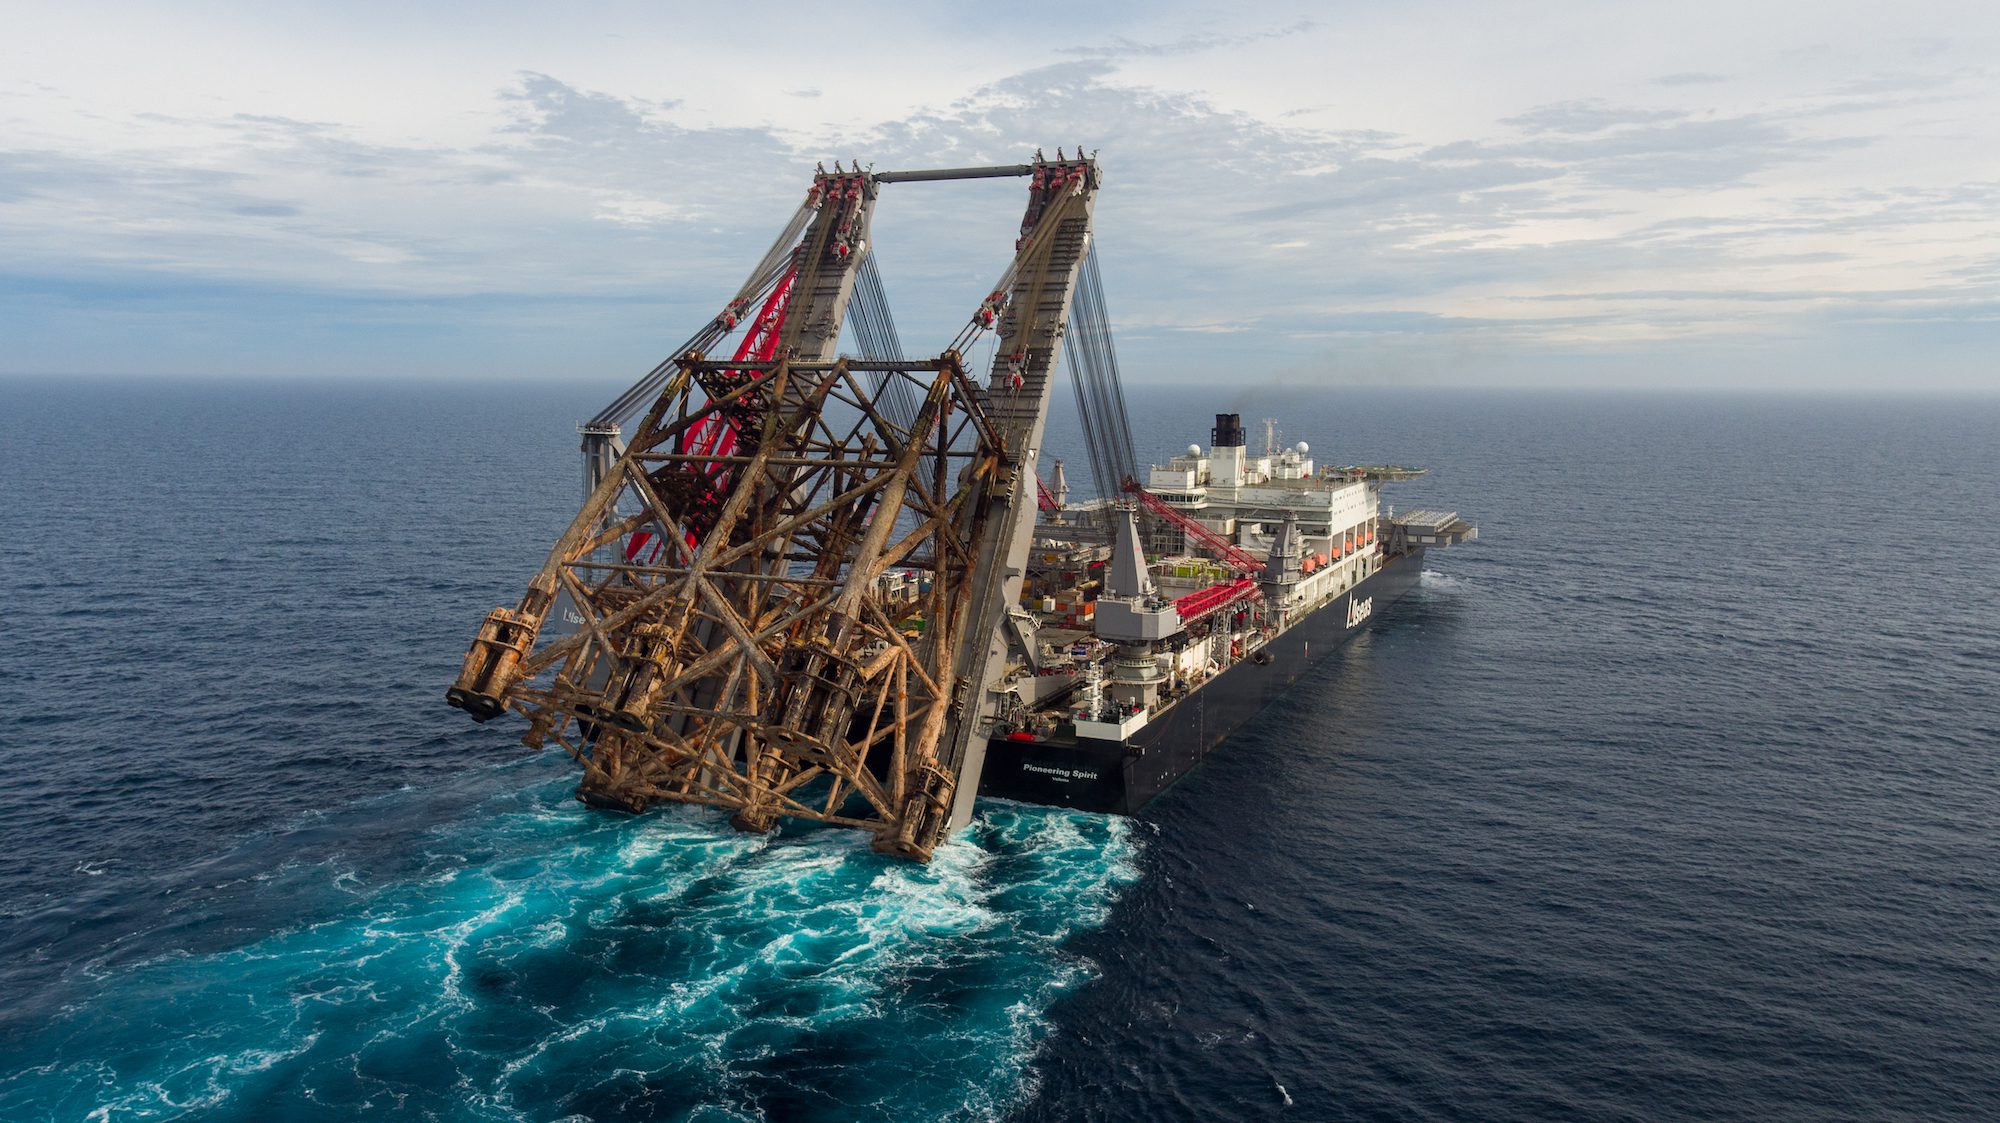 Ship Photos: Pioneering Spirit Lifts Massive 11,000-Metric-Ton Steel Jacket